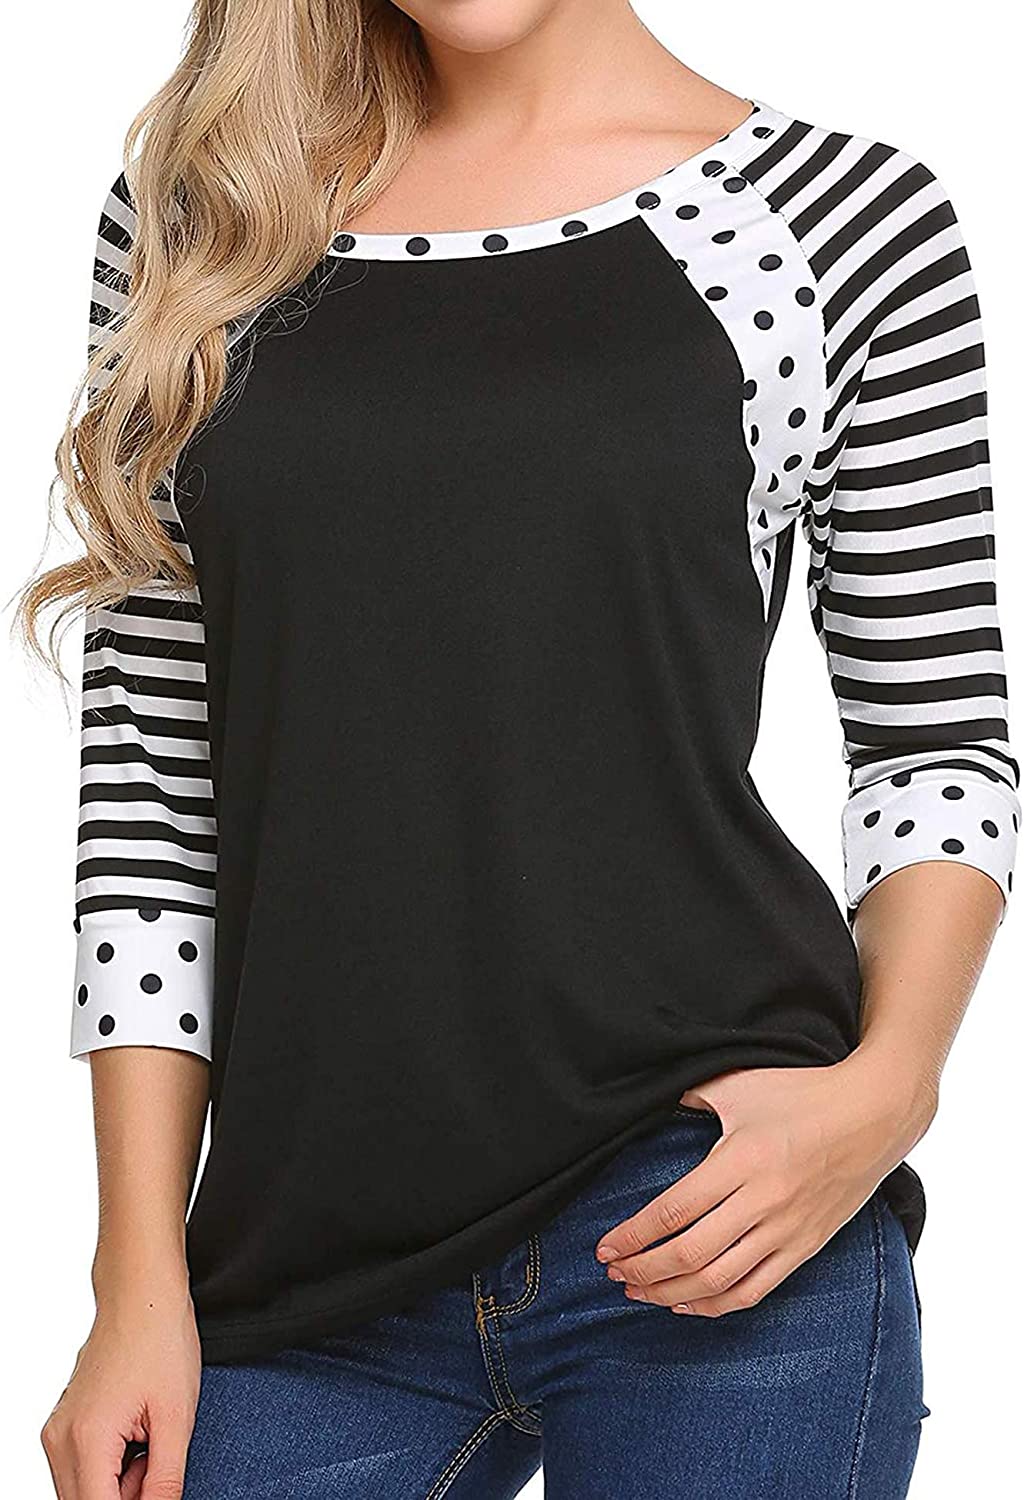 Zeagoo Women's Polka Dots Shirt Striped 3/4 Sleeve Casual Scoop Neck Tops  Tee S-